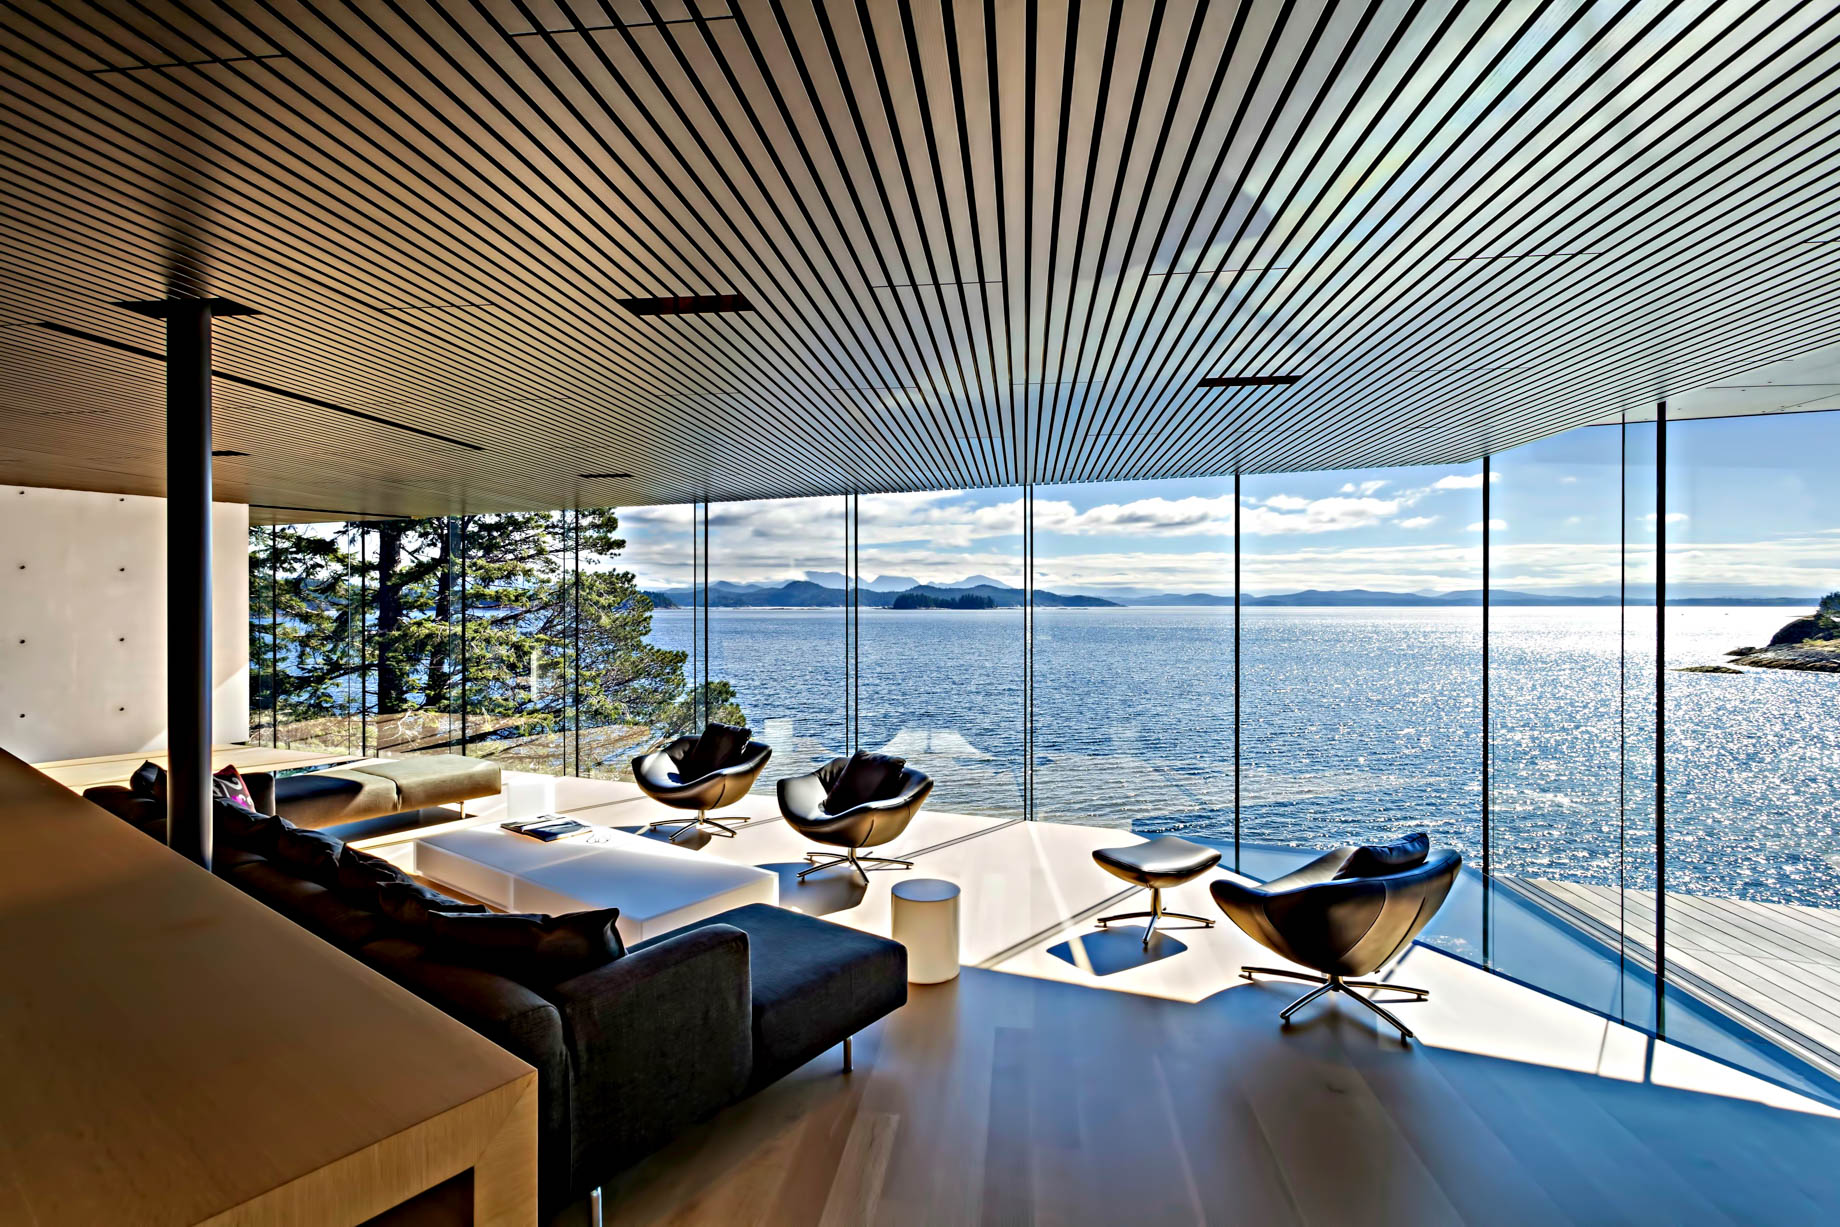 Tula House Luxury Residence – Quadra Island, BC, Canada